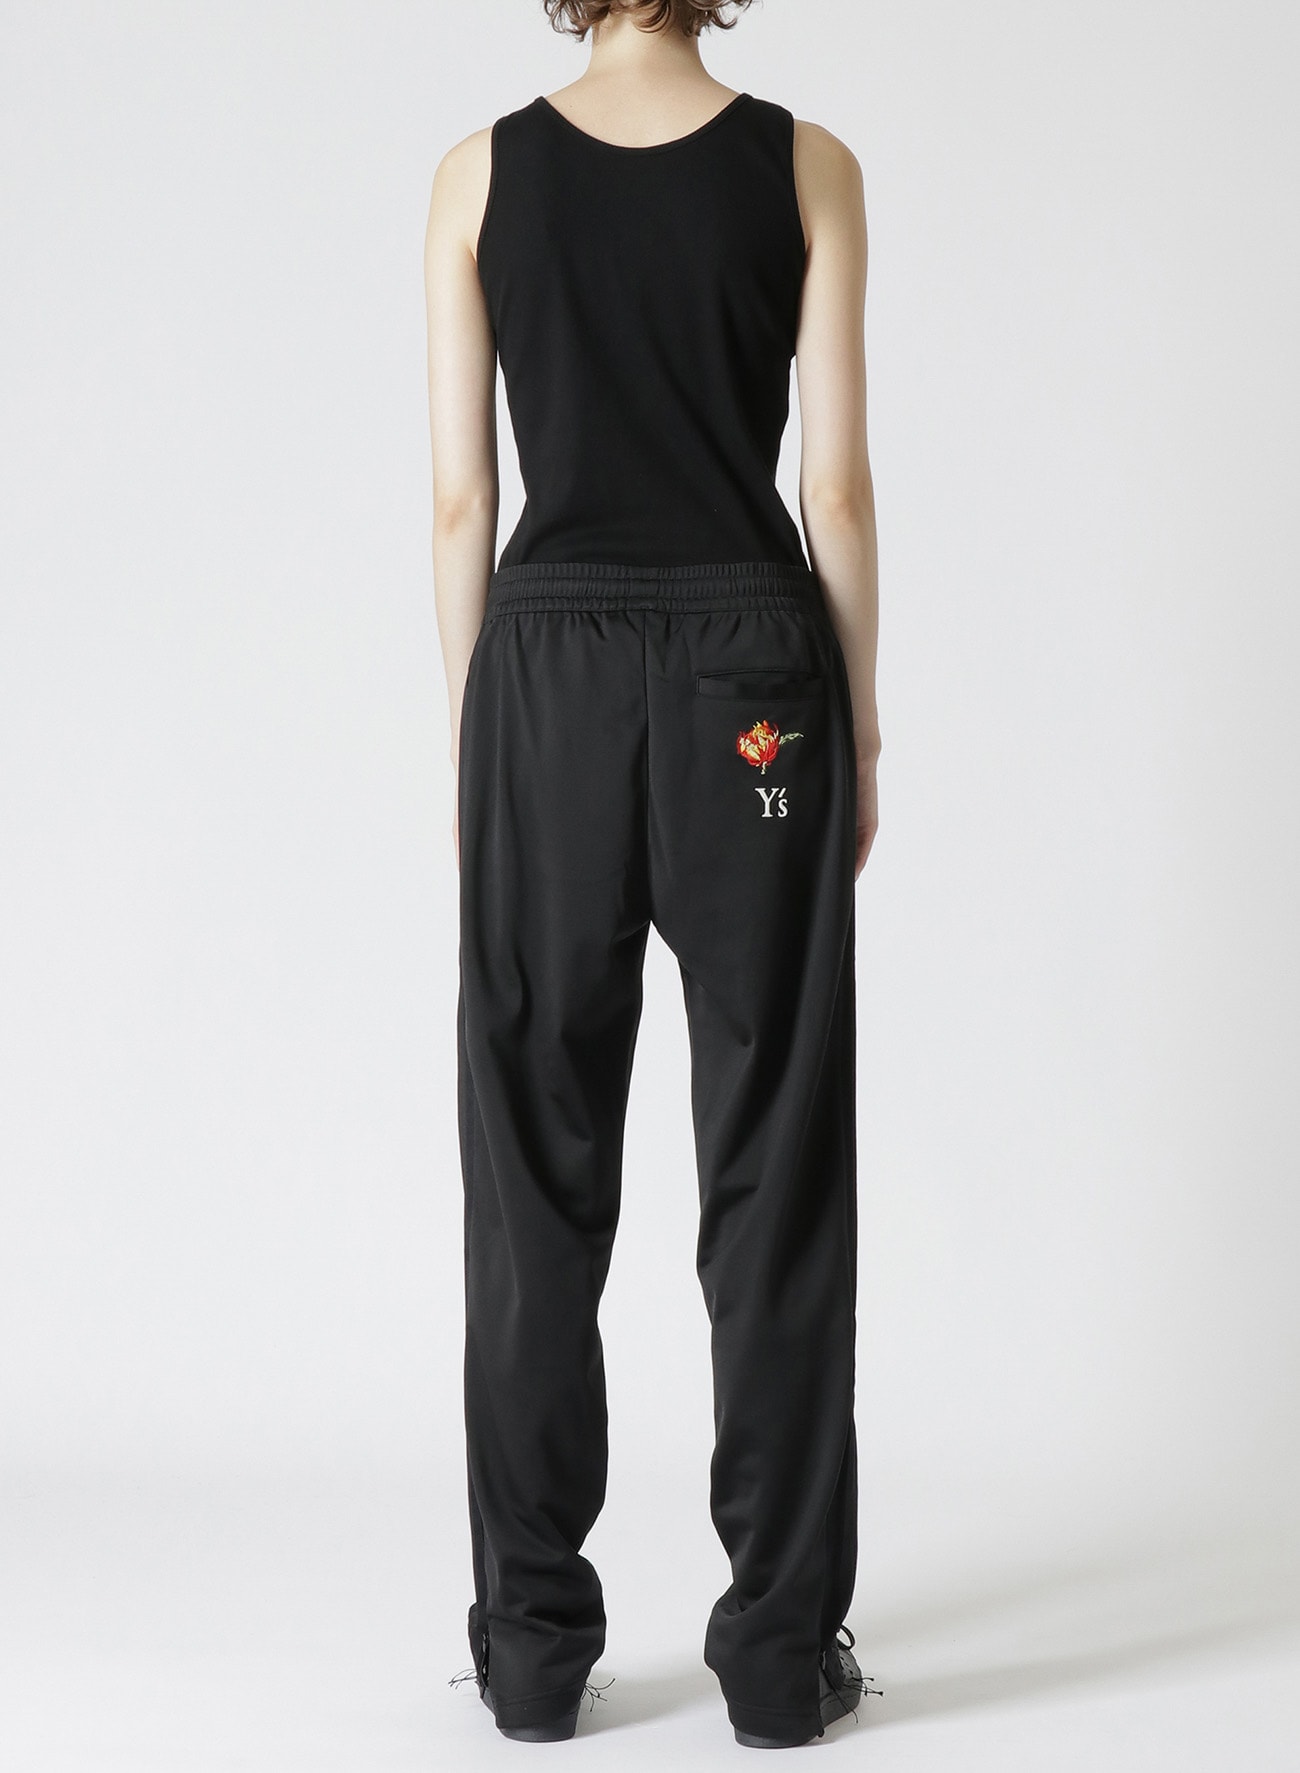 Y's x adidas]CACTUS FLOWER TRACK PANTS(XS Black): Y's｜THE SHOP